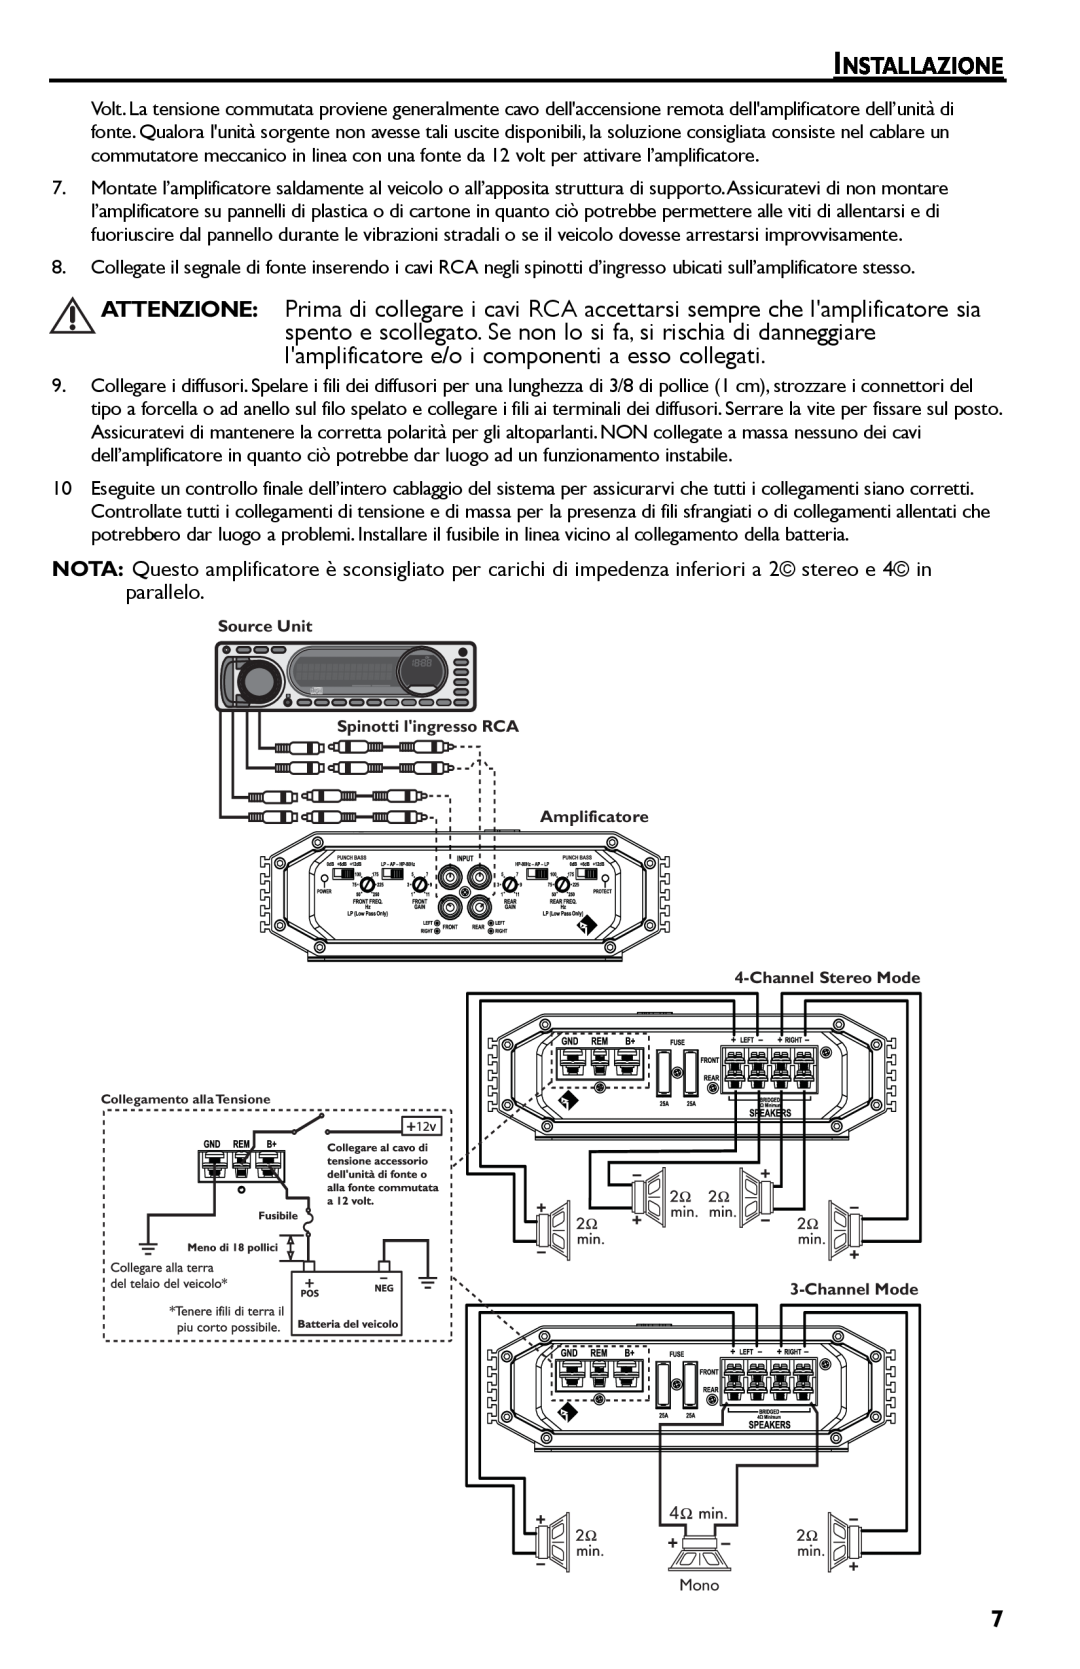 Rockford Fosgate R300-4 manual Source Unit Spinotti lingresso RCA Amplificatore, ChannelStereo Mode, ChannelMode 